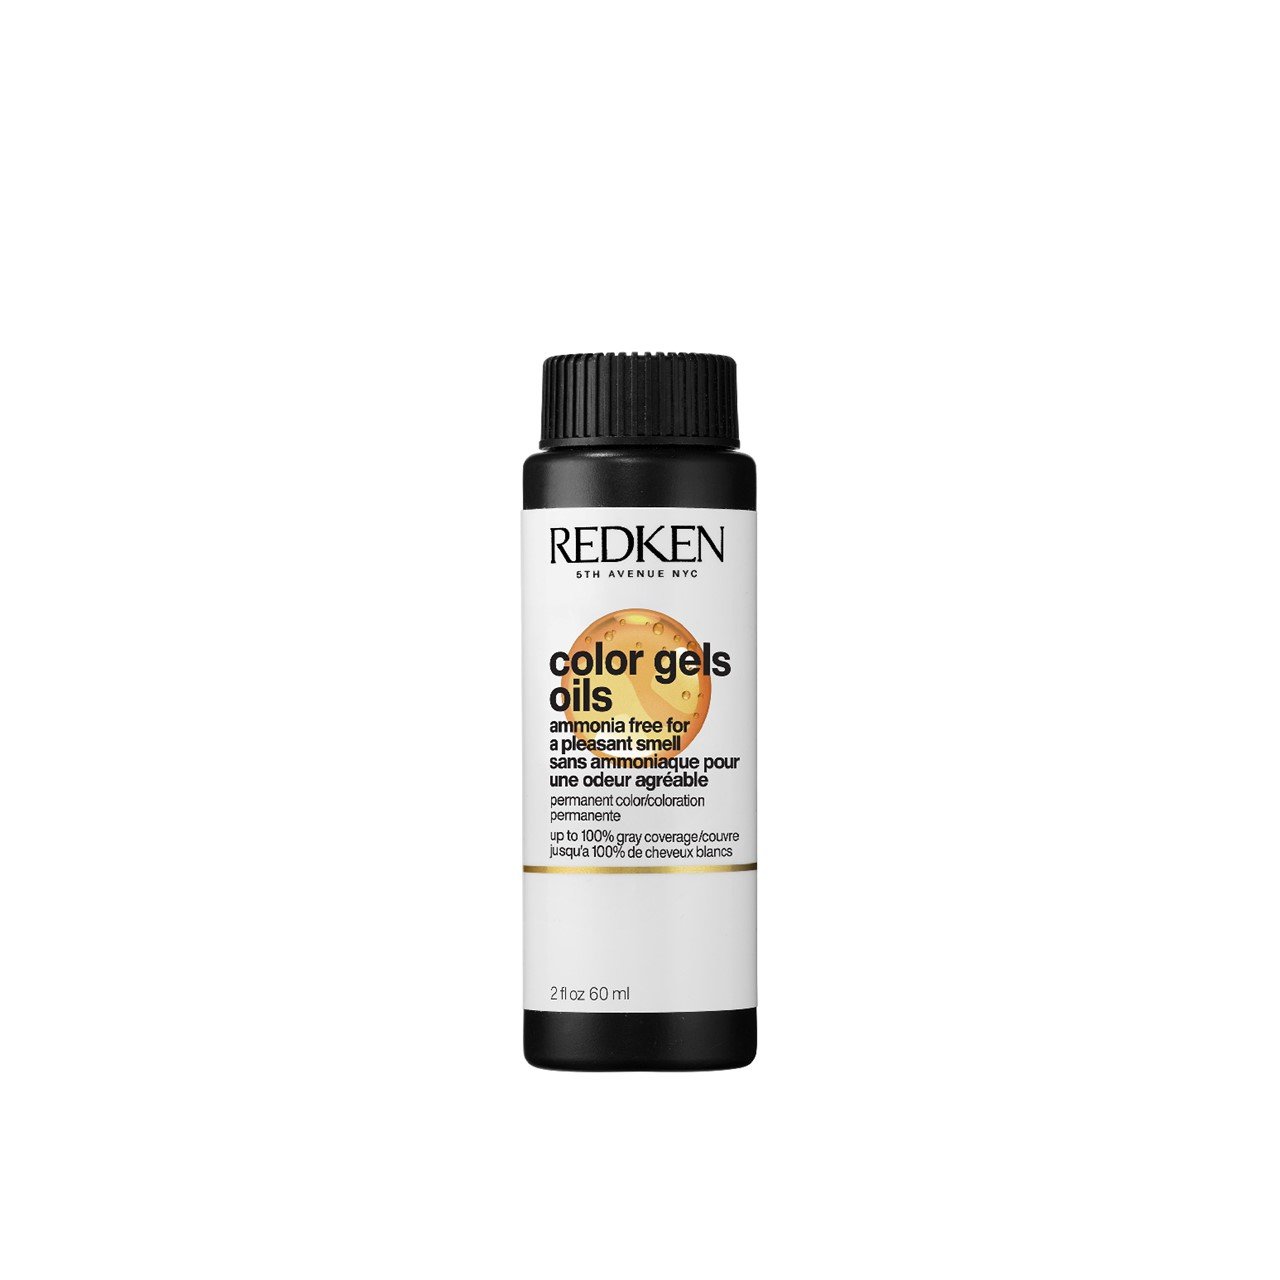 Redken Color Gels Oils 7CC Urban Fever Permanent Hair Dye 60ml (2.03 fl oz)